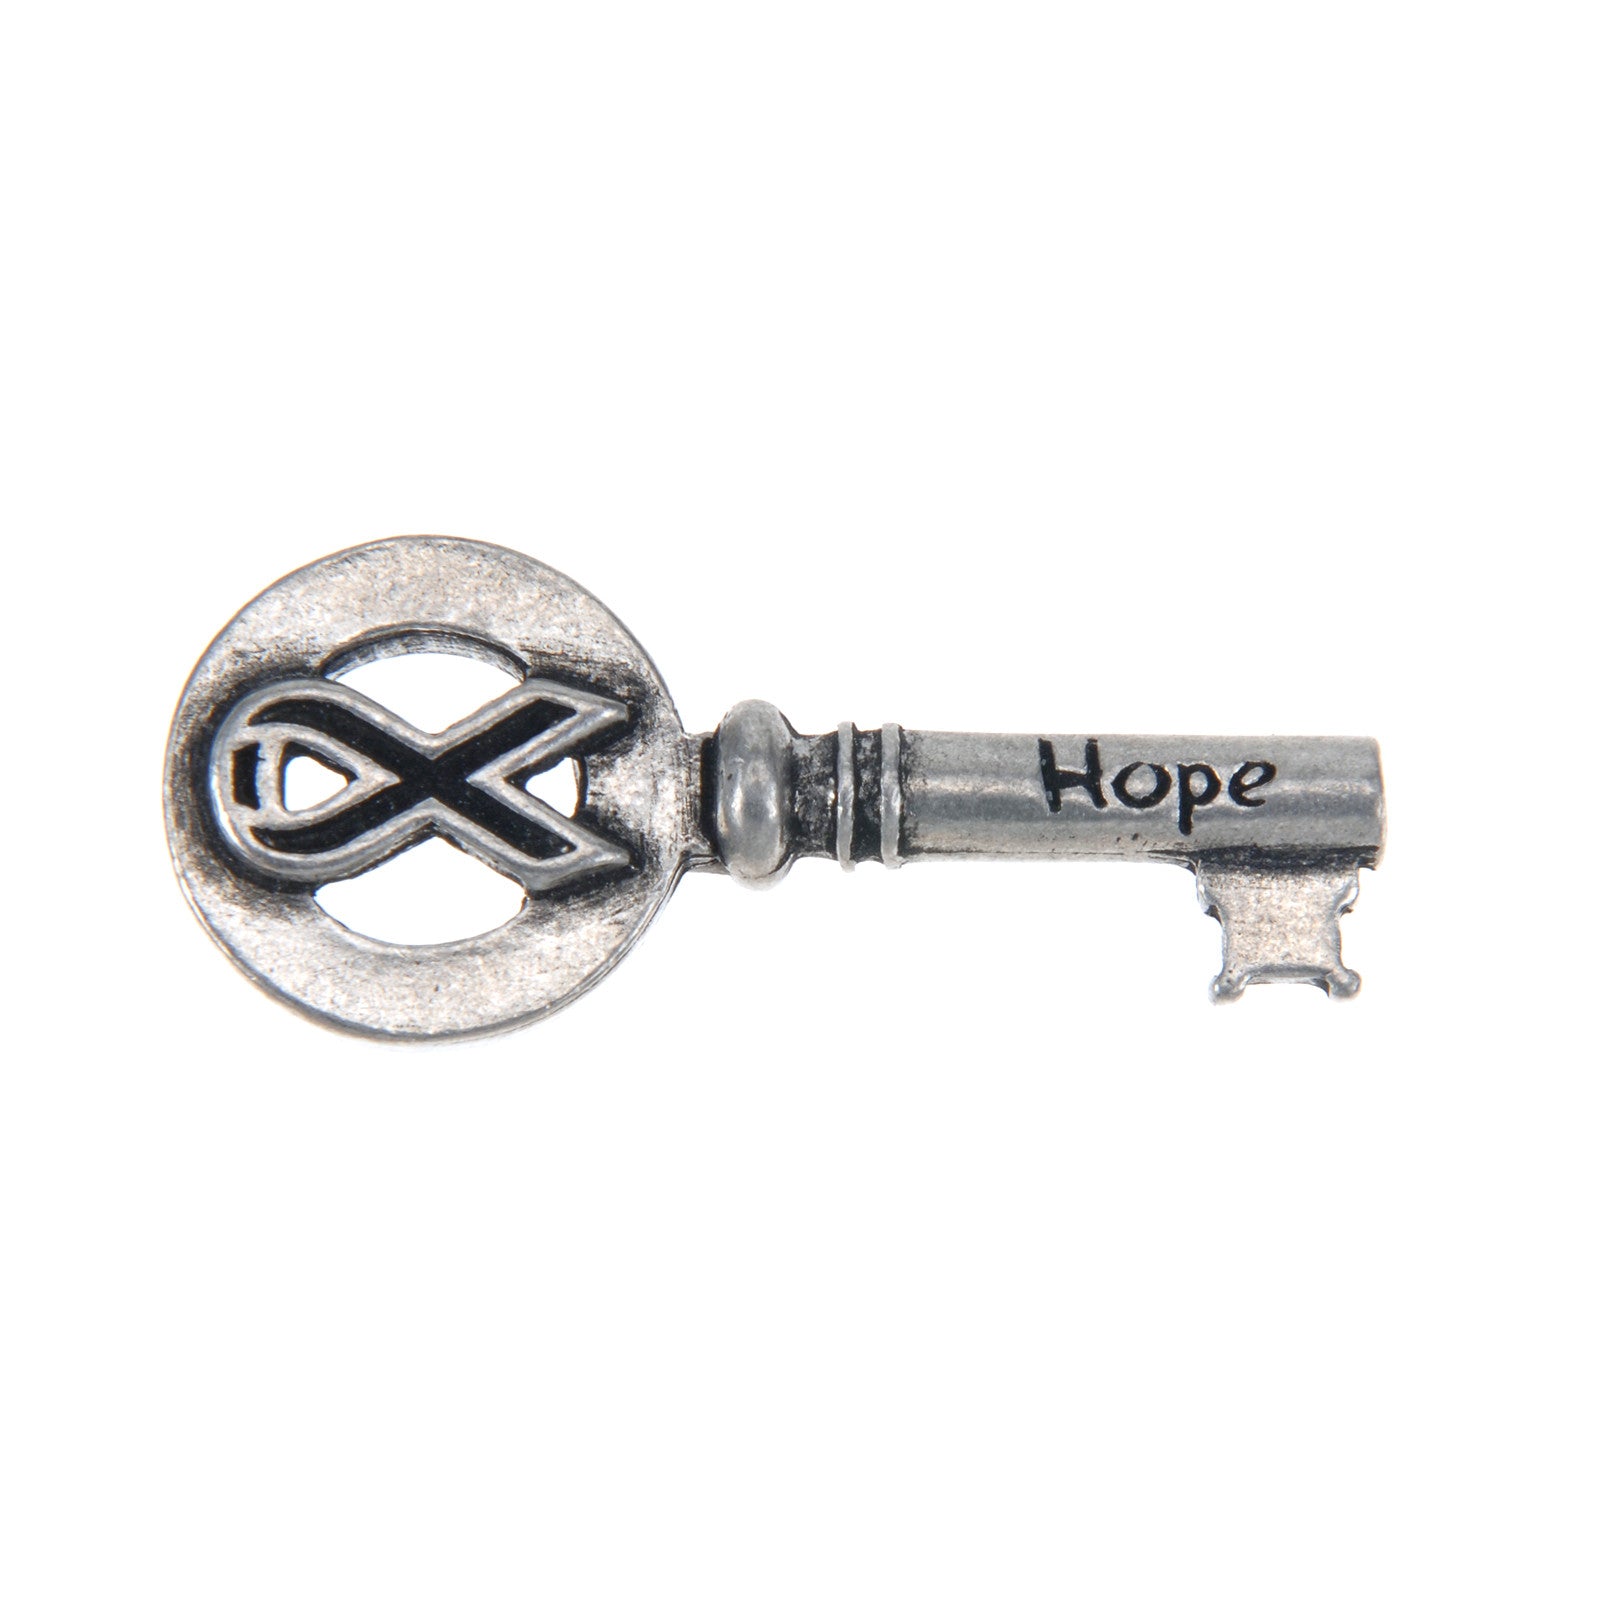 Hope Key - Whitney Howard Designs